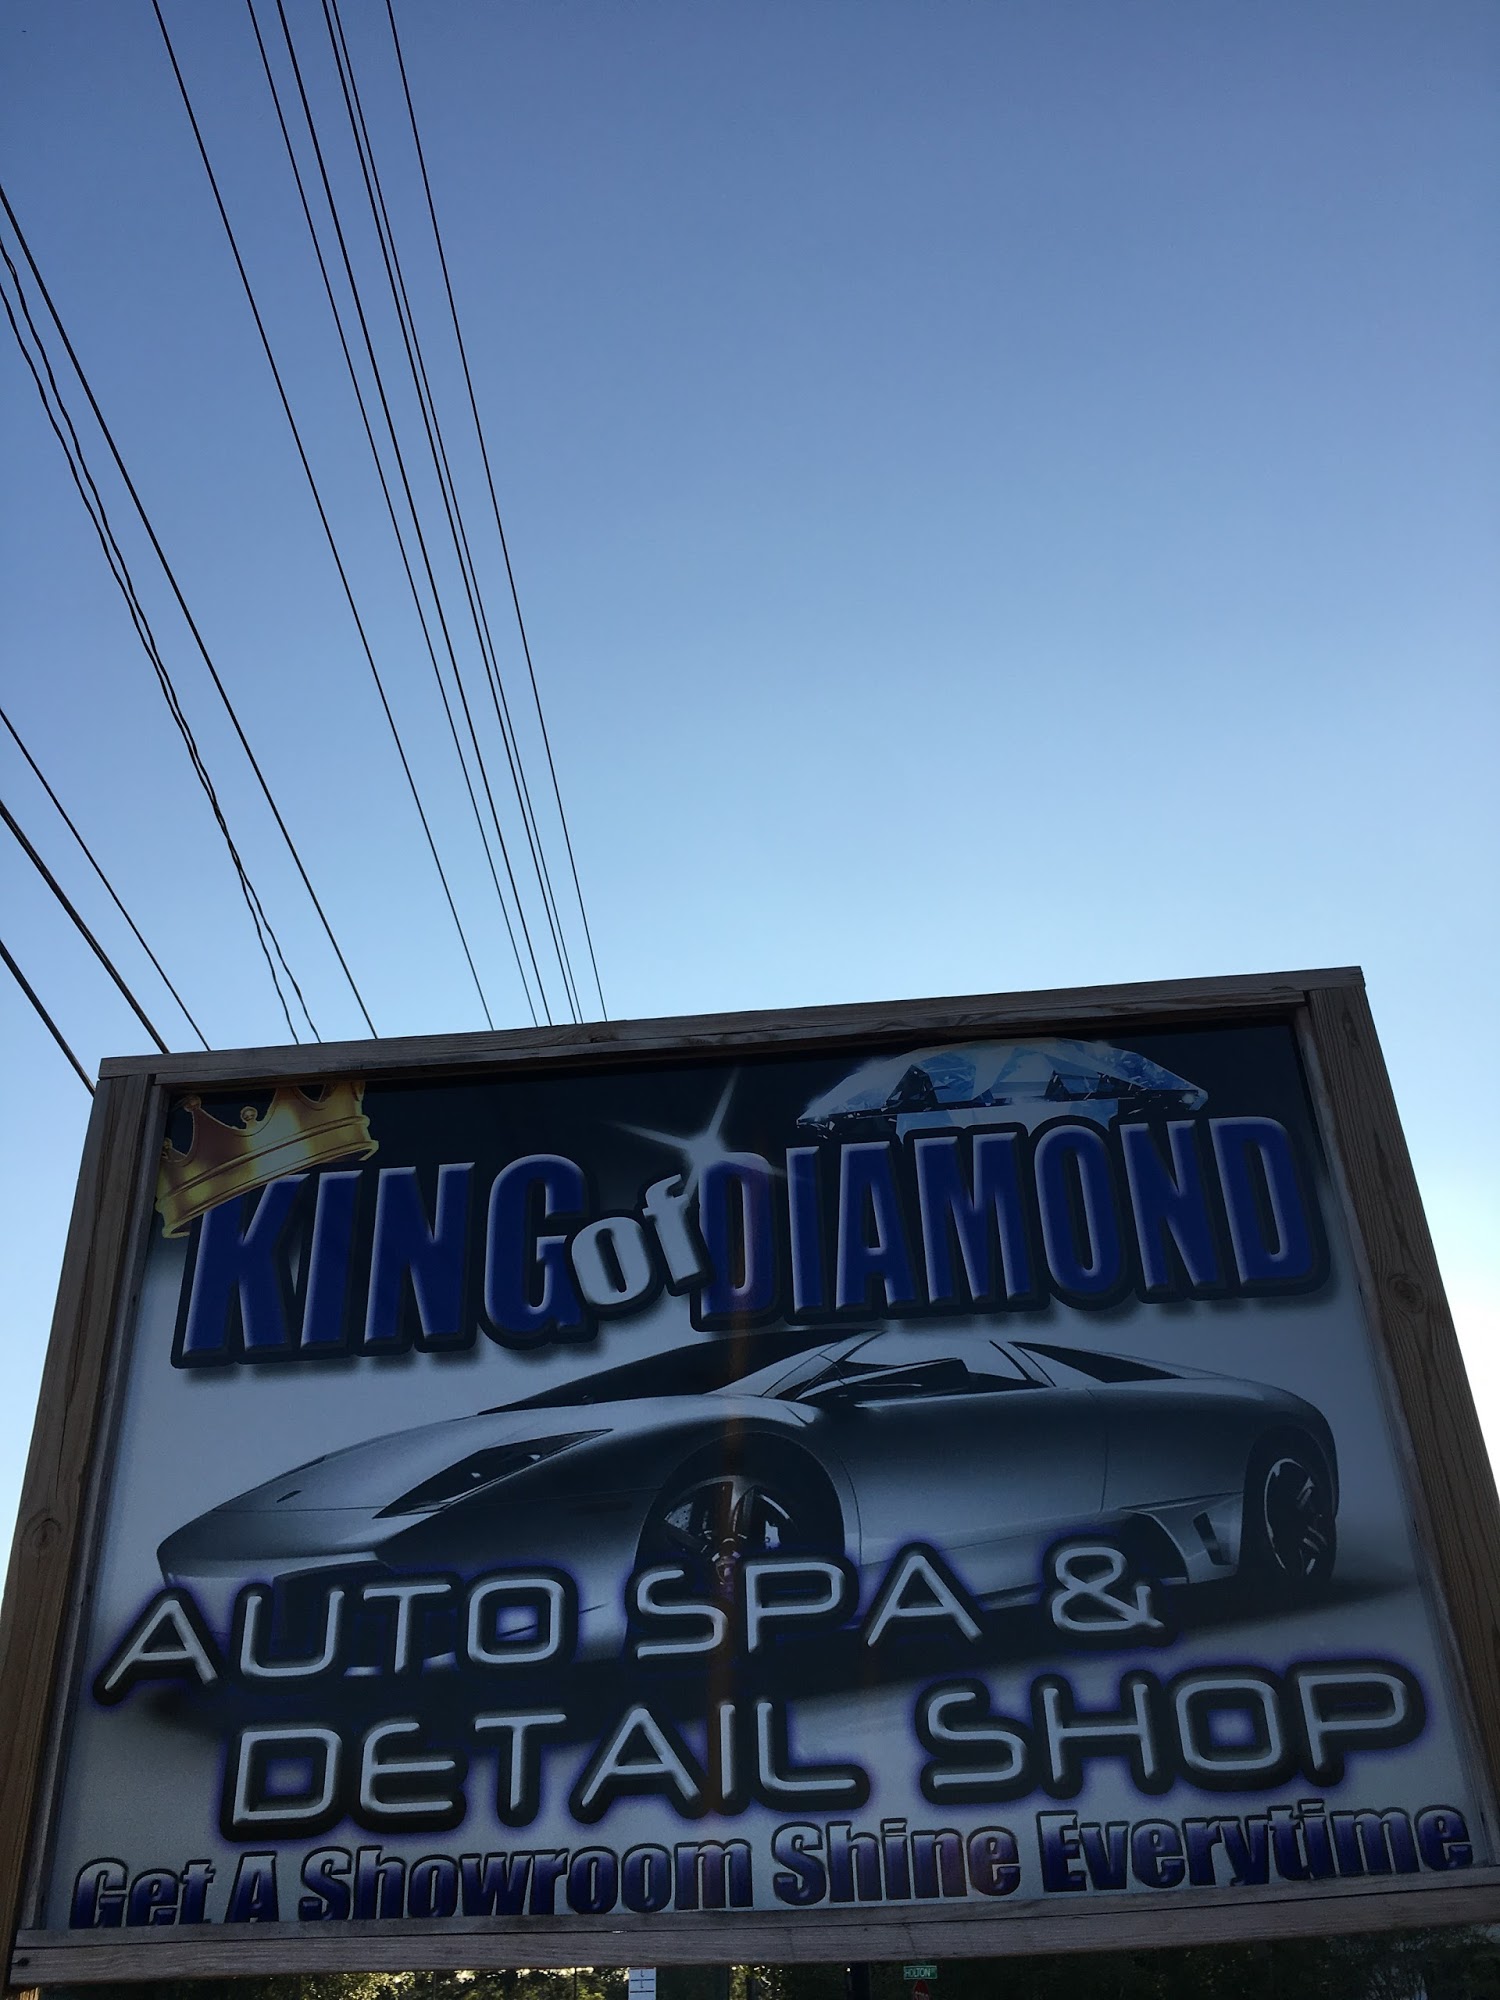 King of Diamond Auto Spa and Detail